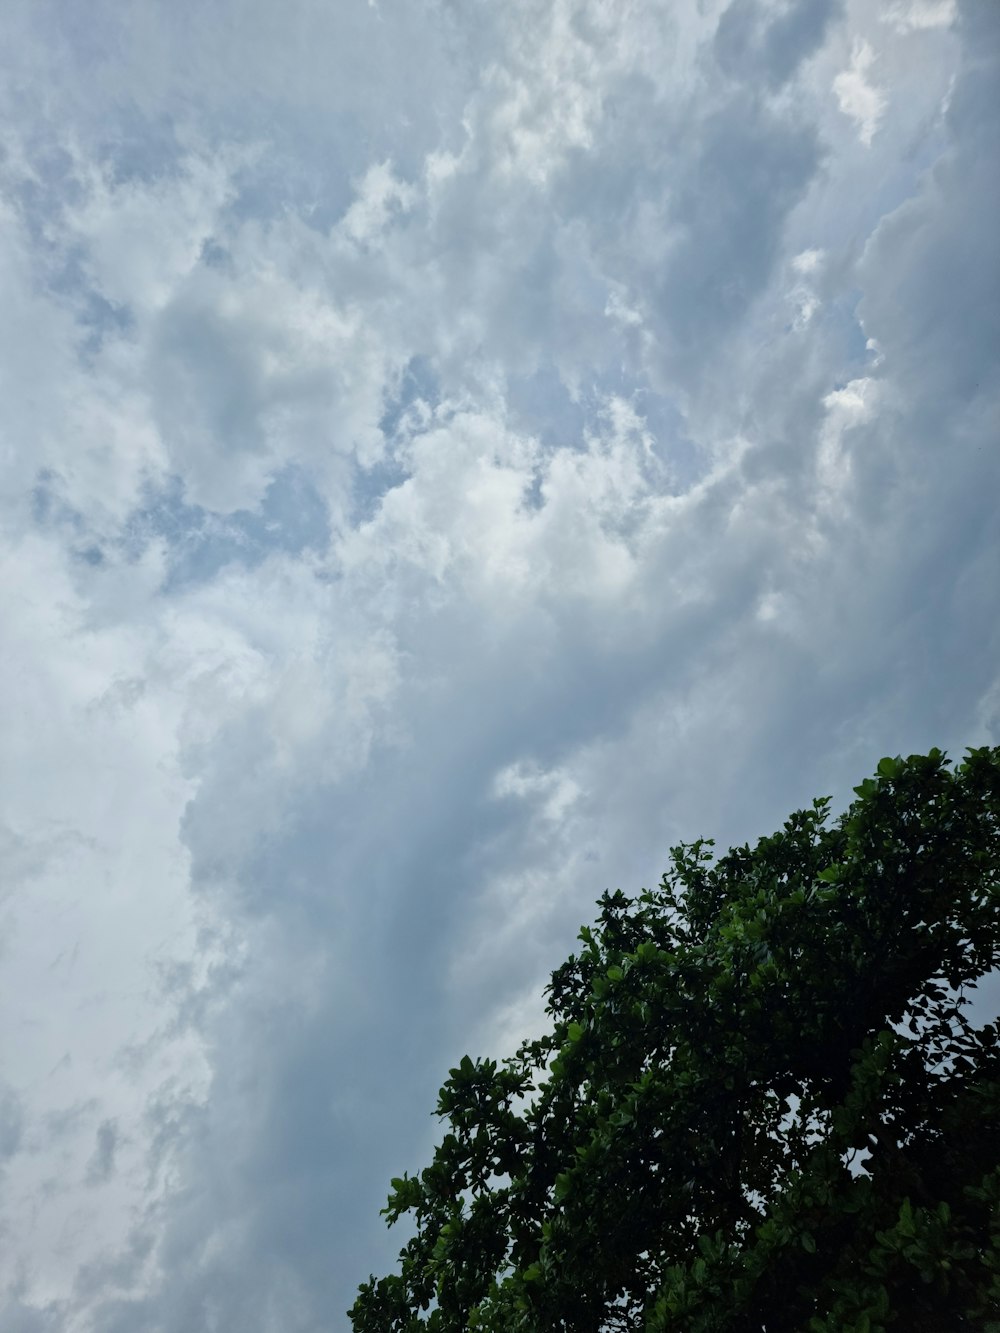 a tree under a cloudy sky